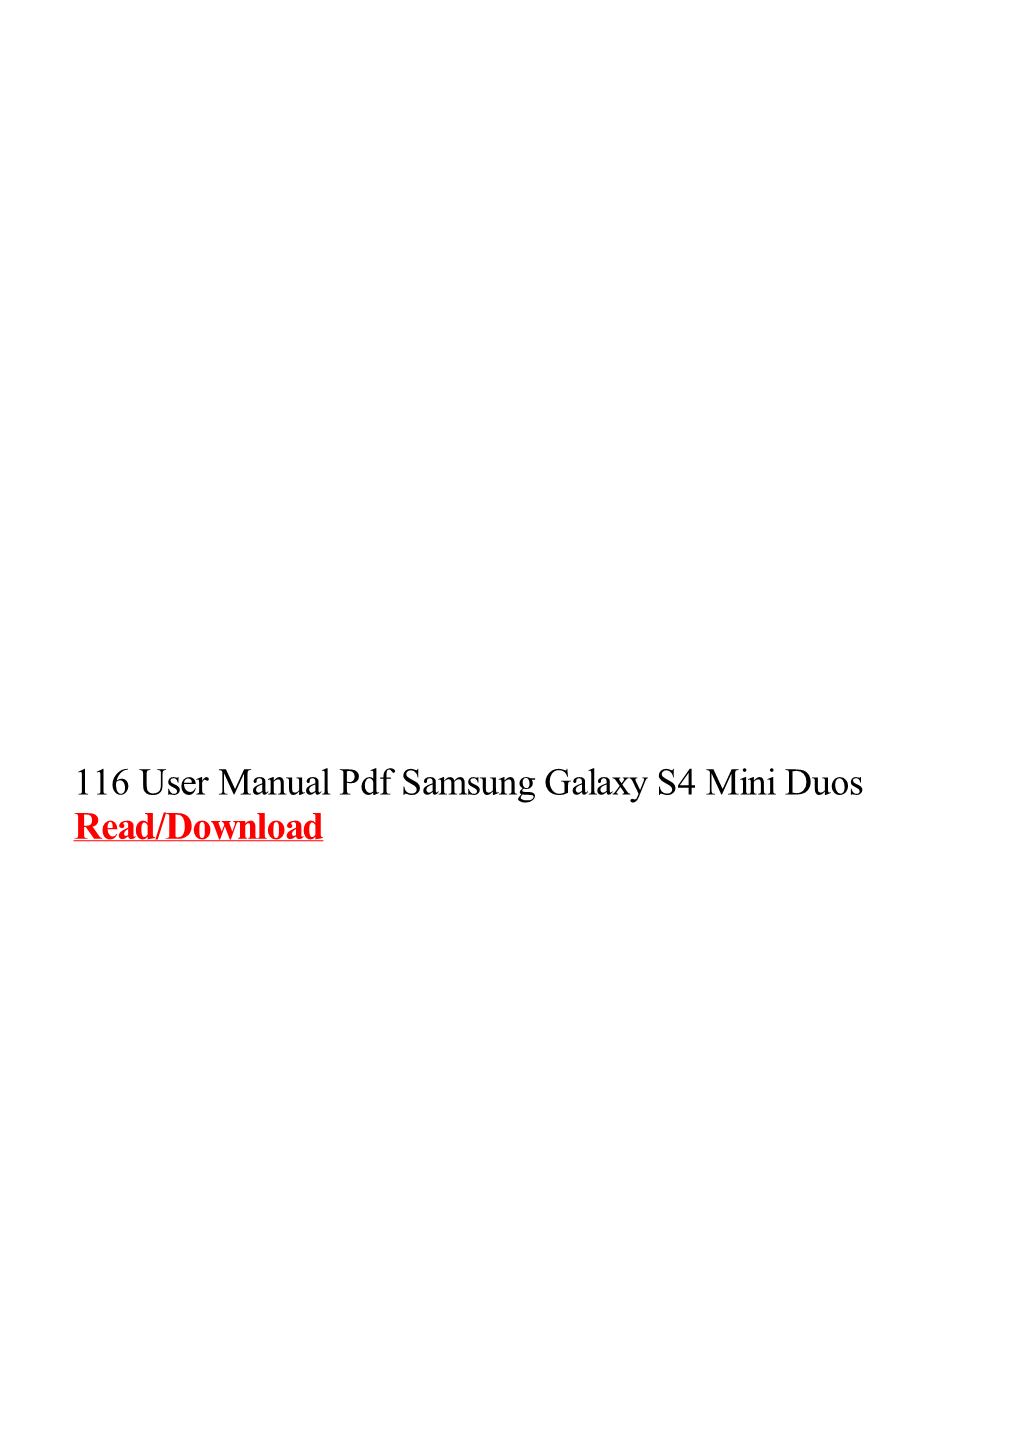 116 User Manual Pdf Samsung Galaxy S4 Mini Duos